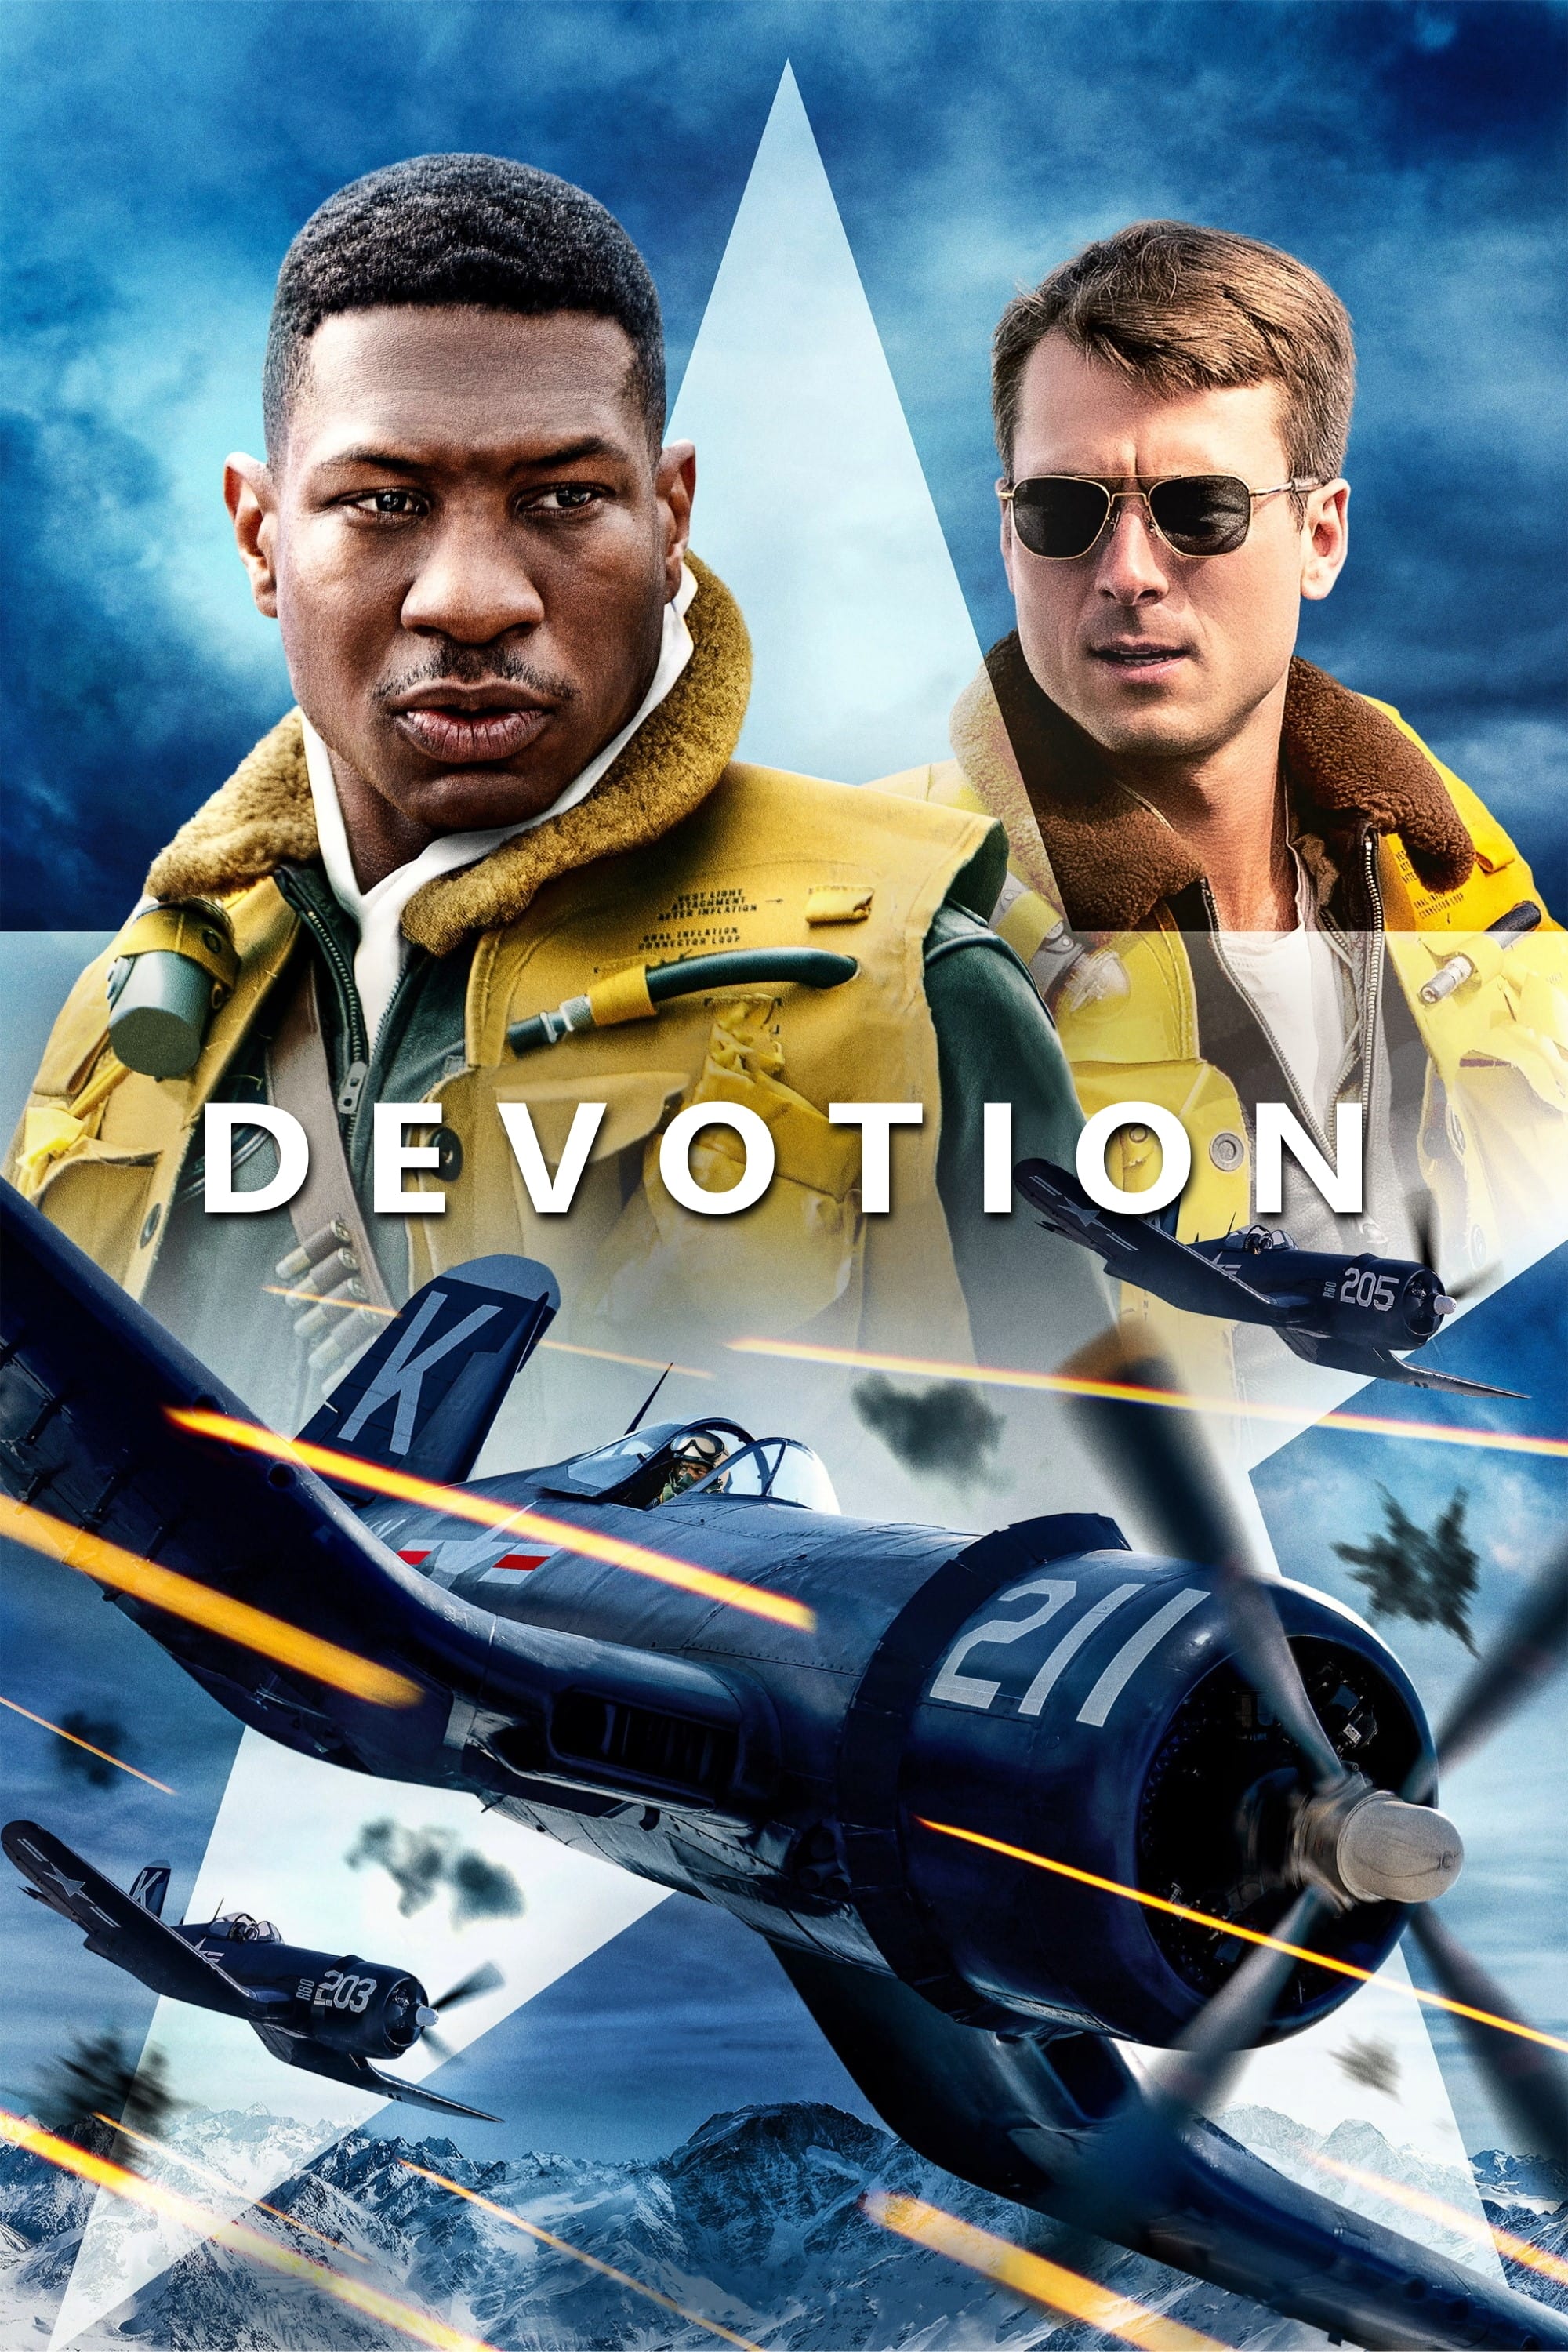 Devotion: una historia de héroes